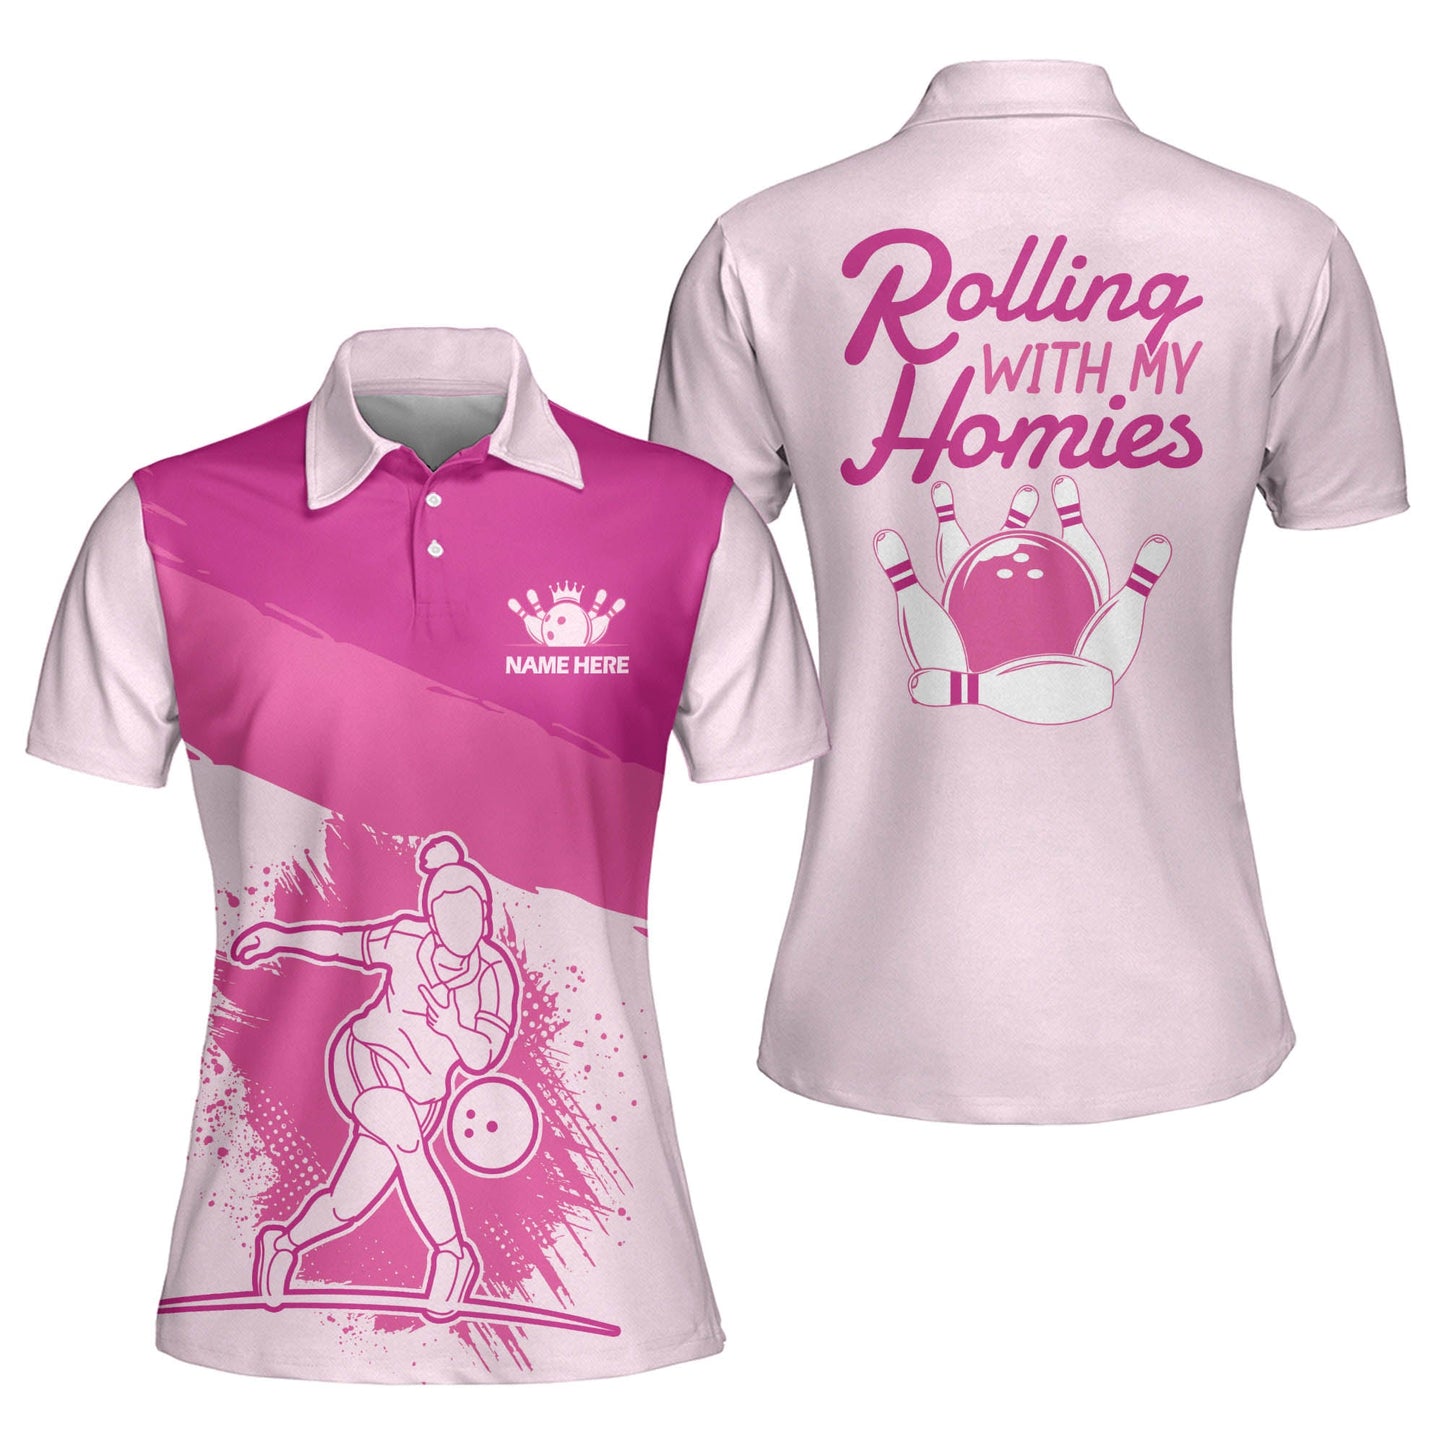 Custom Bowling Shirts For Women - Womens Bowling Shirts Funny - Customize Women's Pink Bowling Shirts - Rolling With My Homies Bowling Shirts BW0072